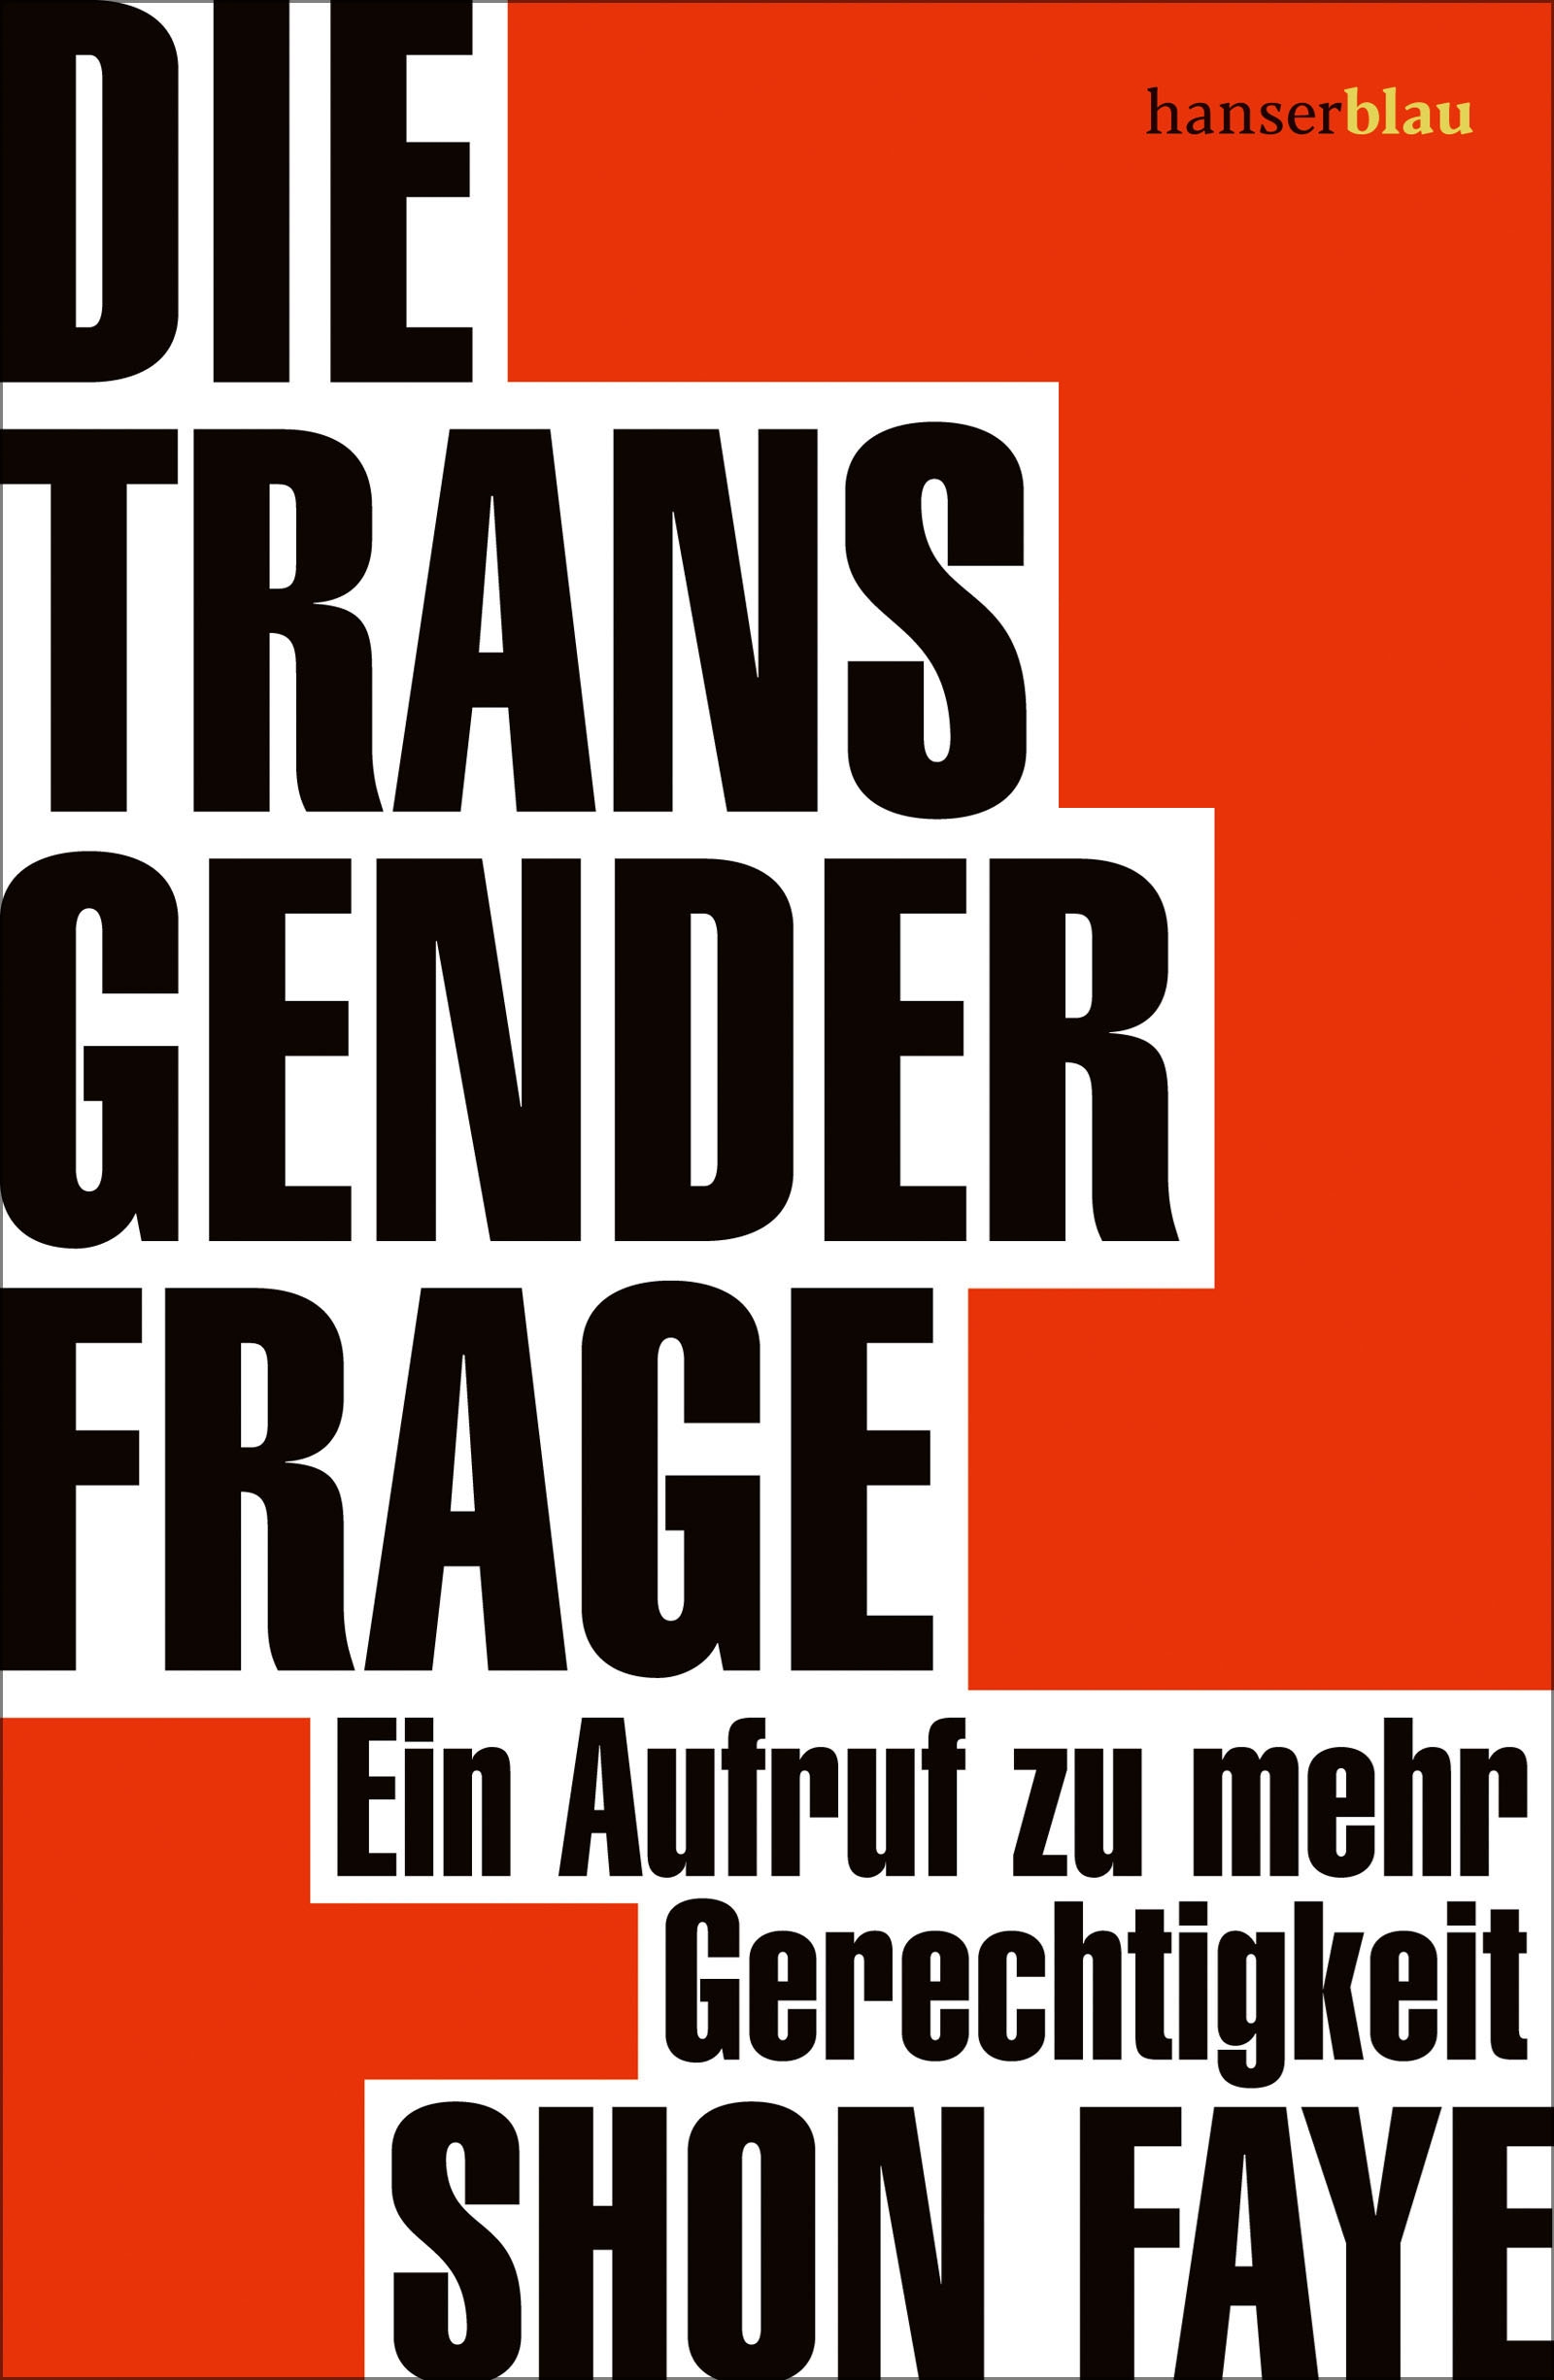 Die Transgender-Frage